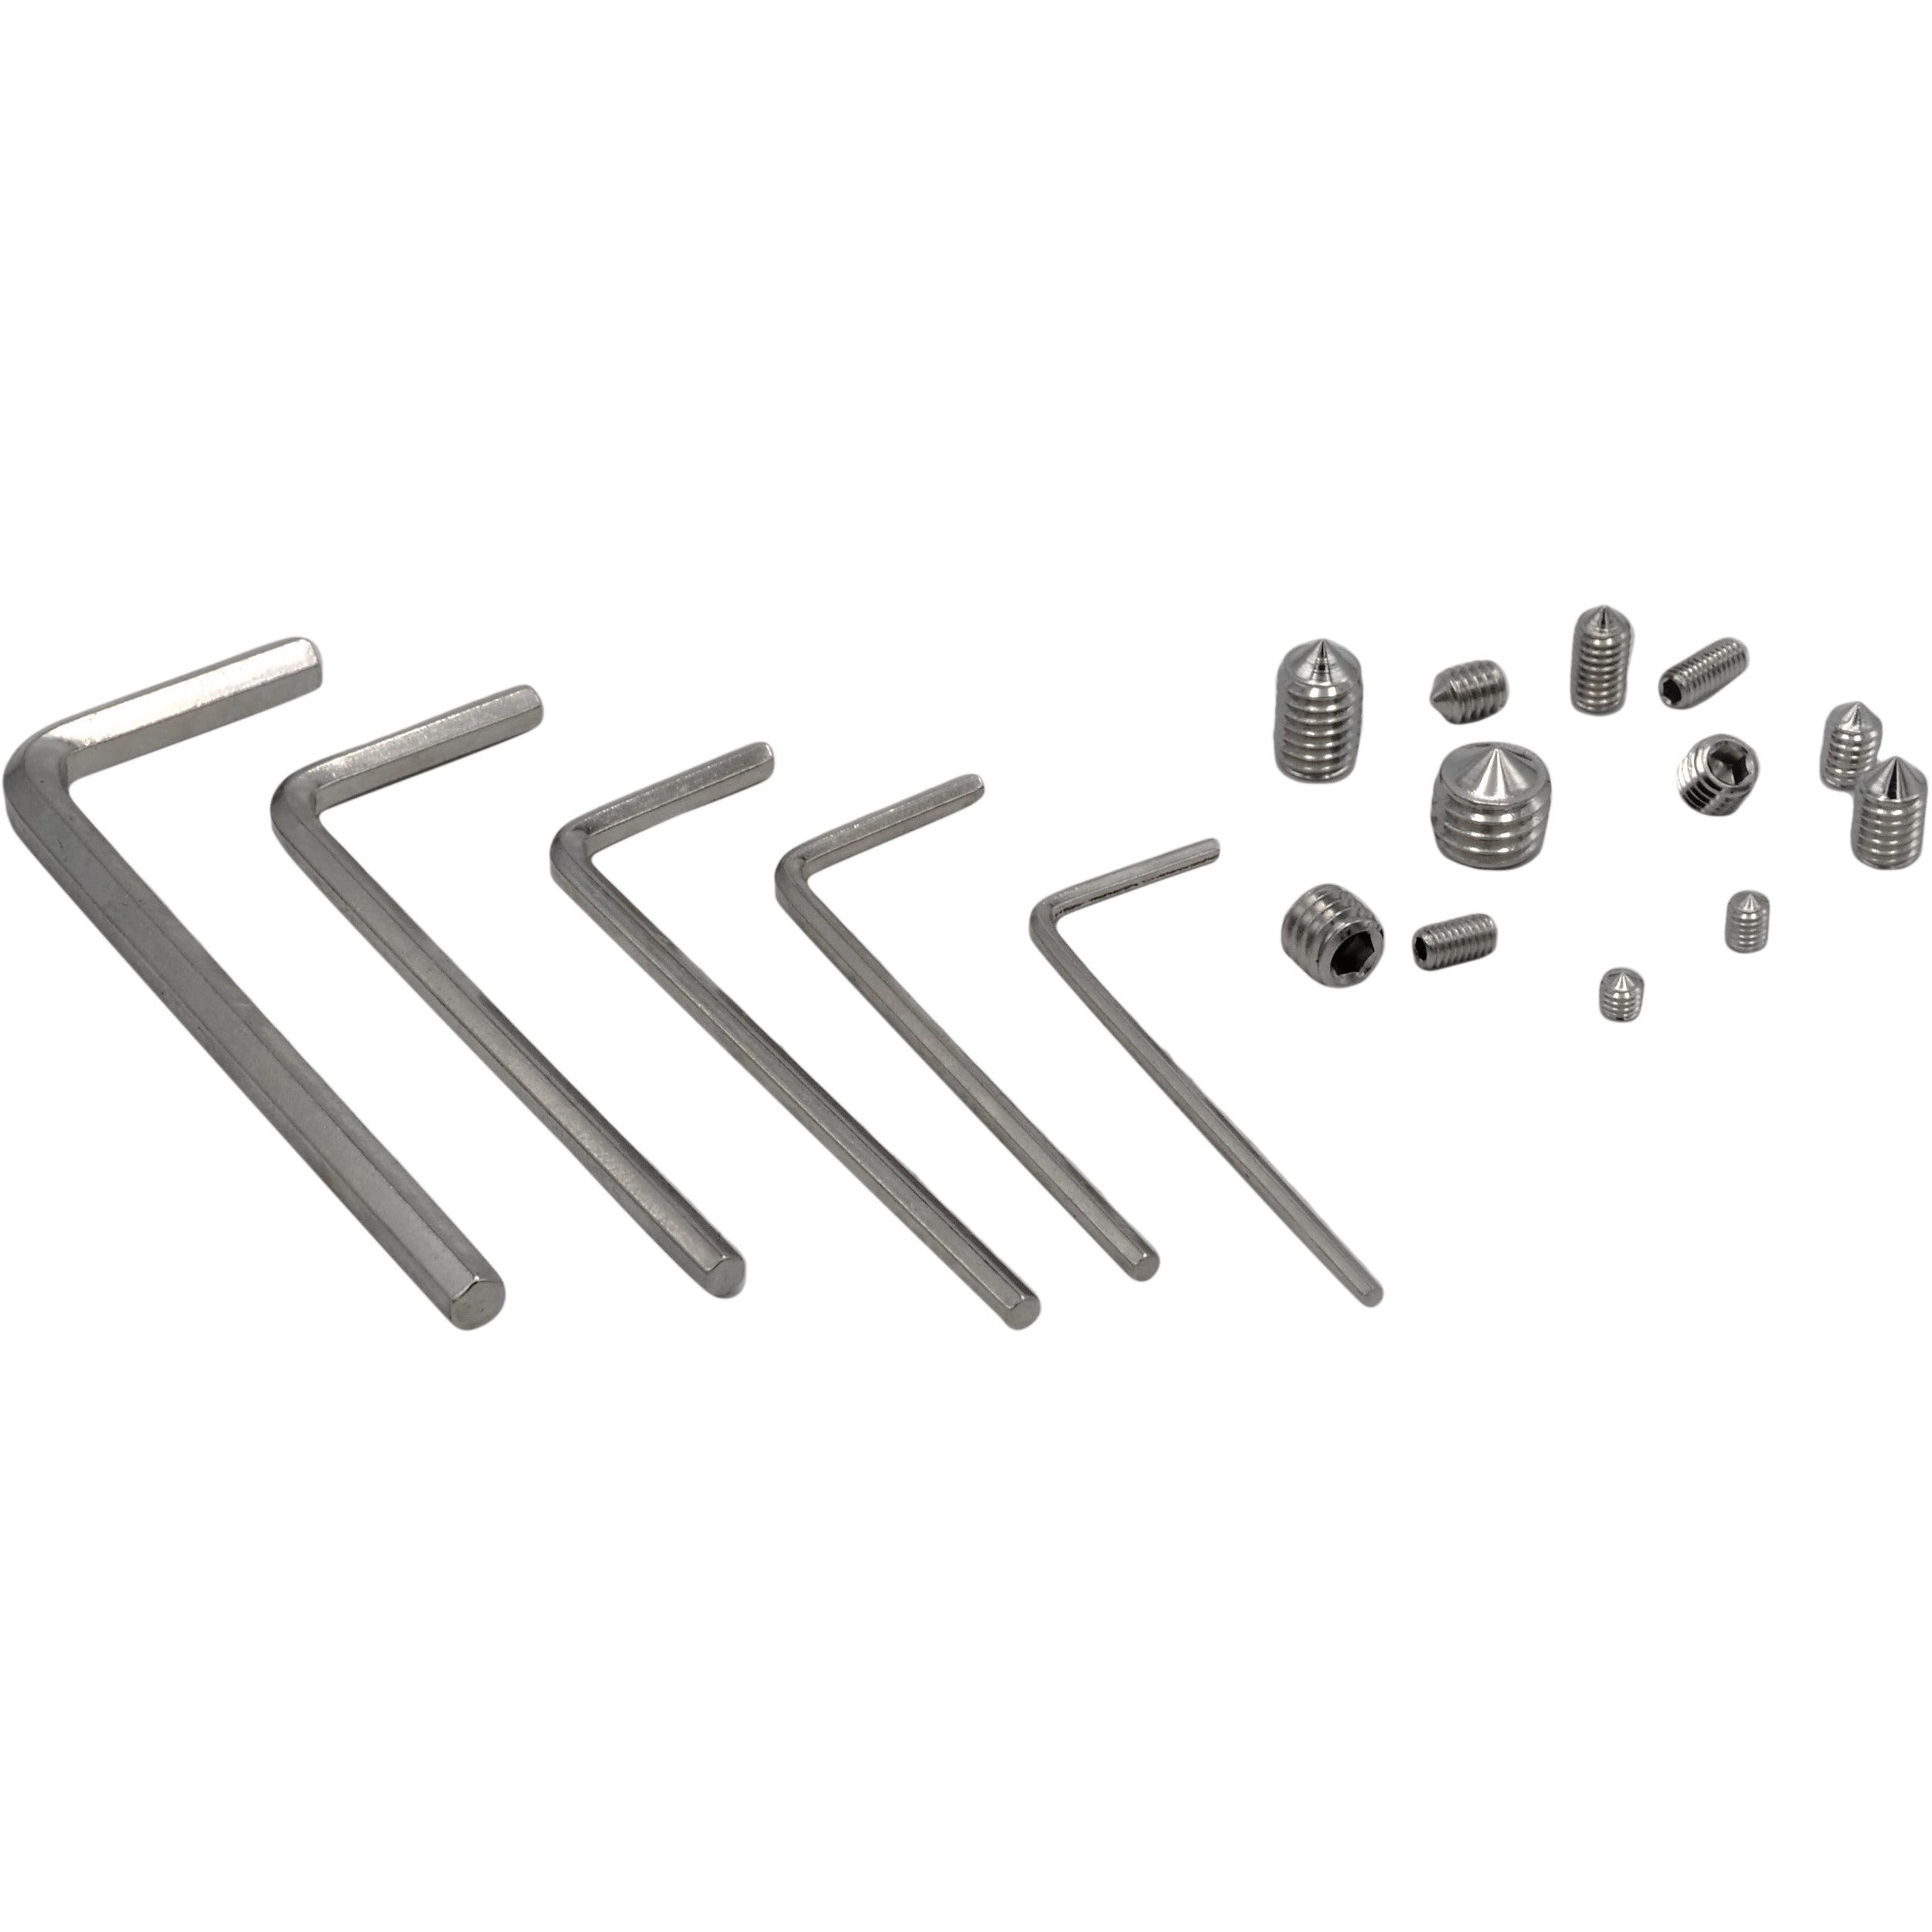  Stainless Steel Metric Set Screw 410 Piece Grab Kit Assortment